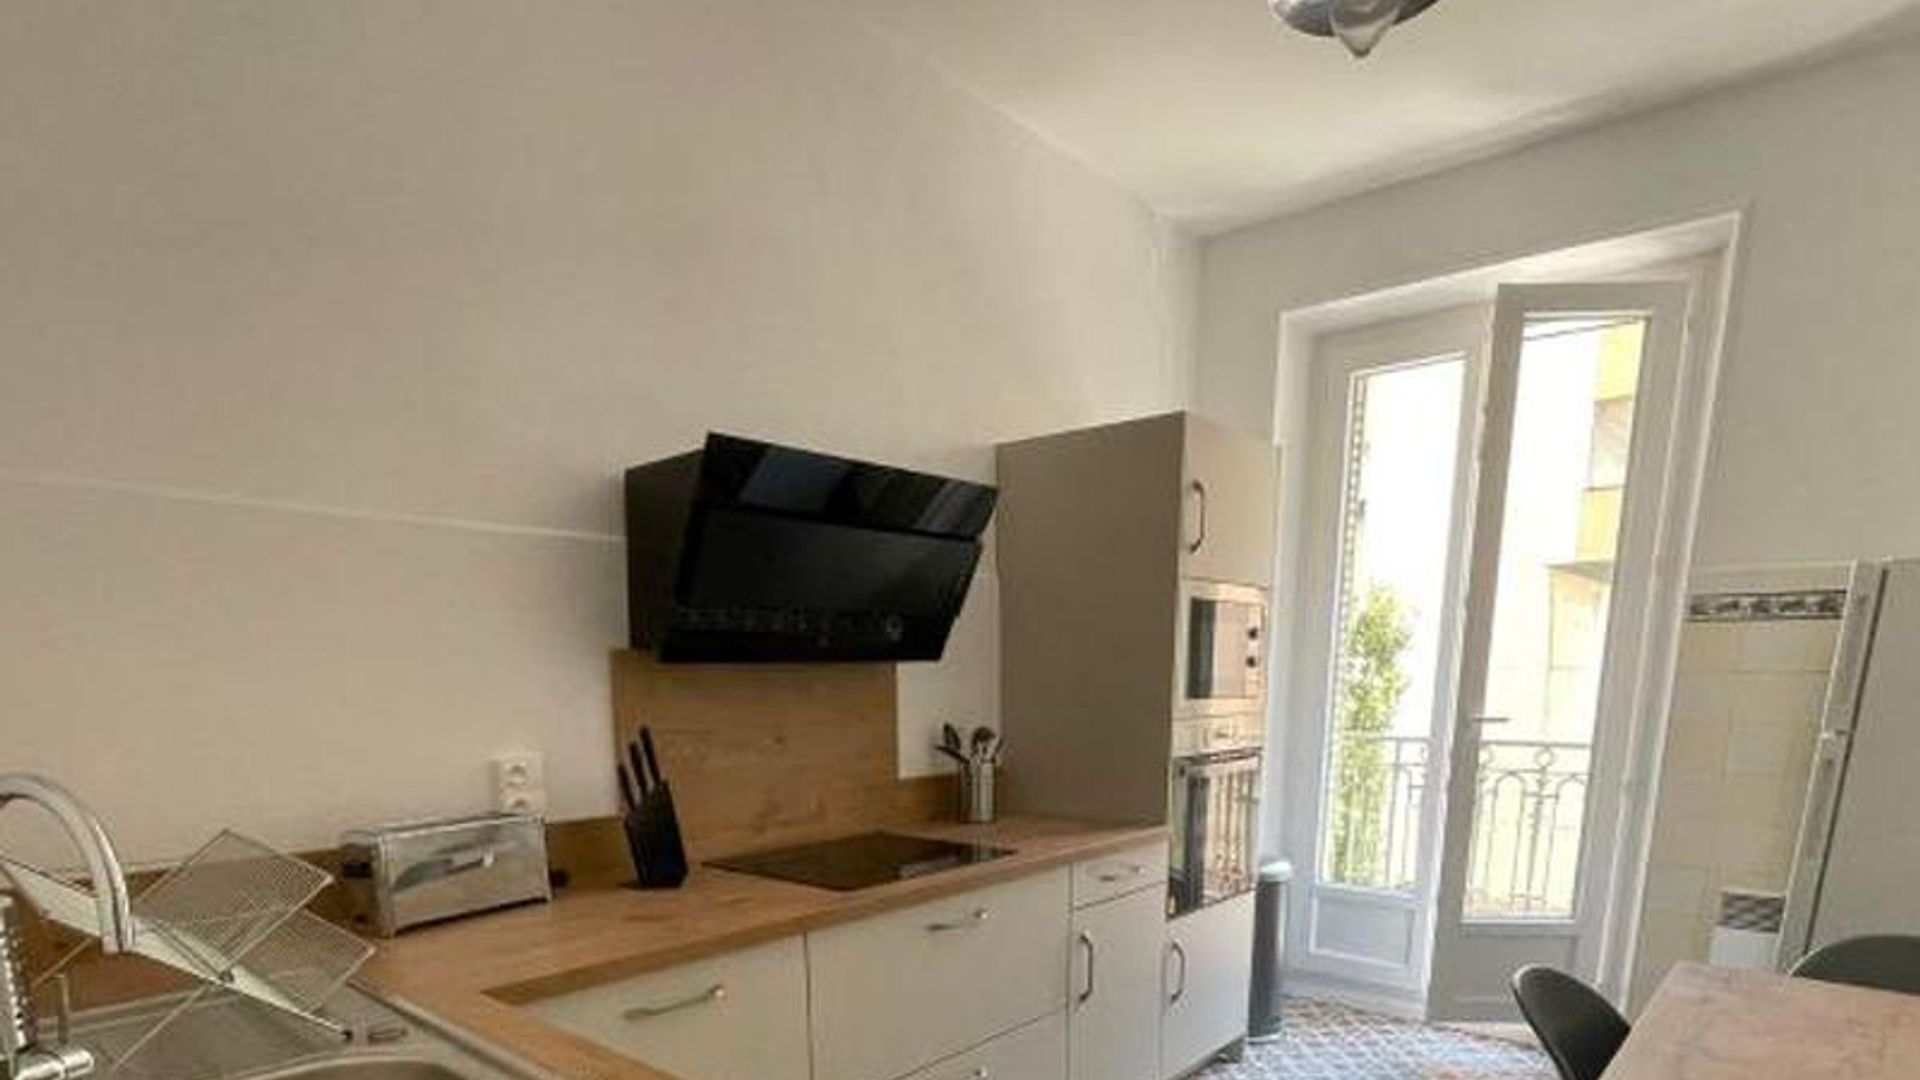 1 bedroom apartment at 12 Rue Casimir Brenier, 38000 Grenoble, France ...